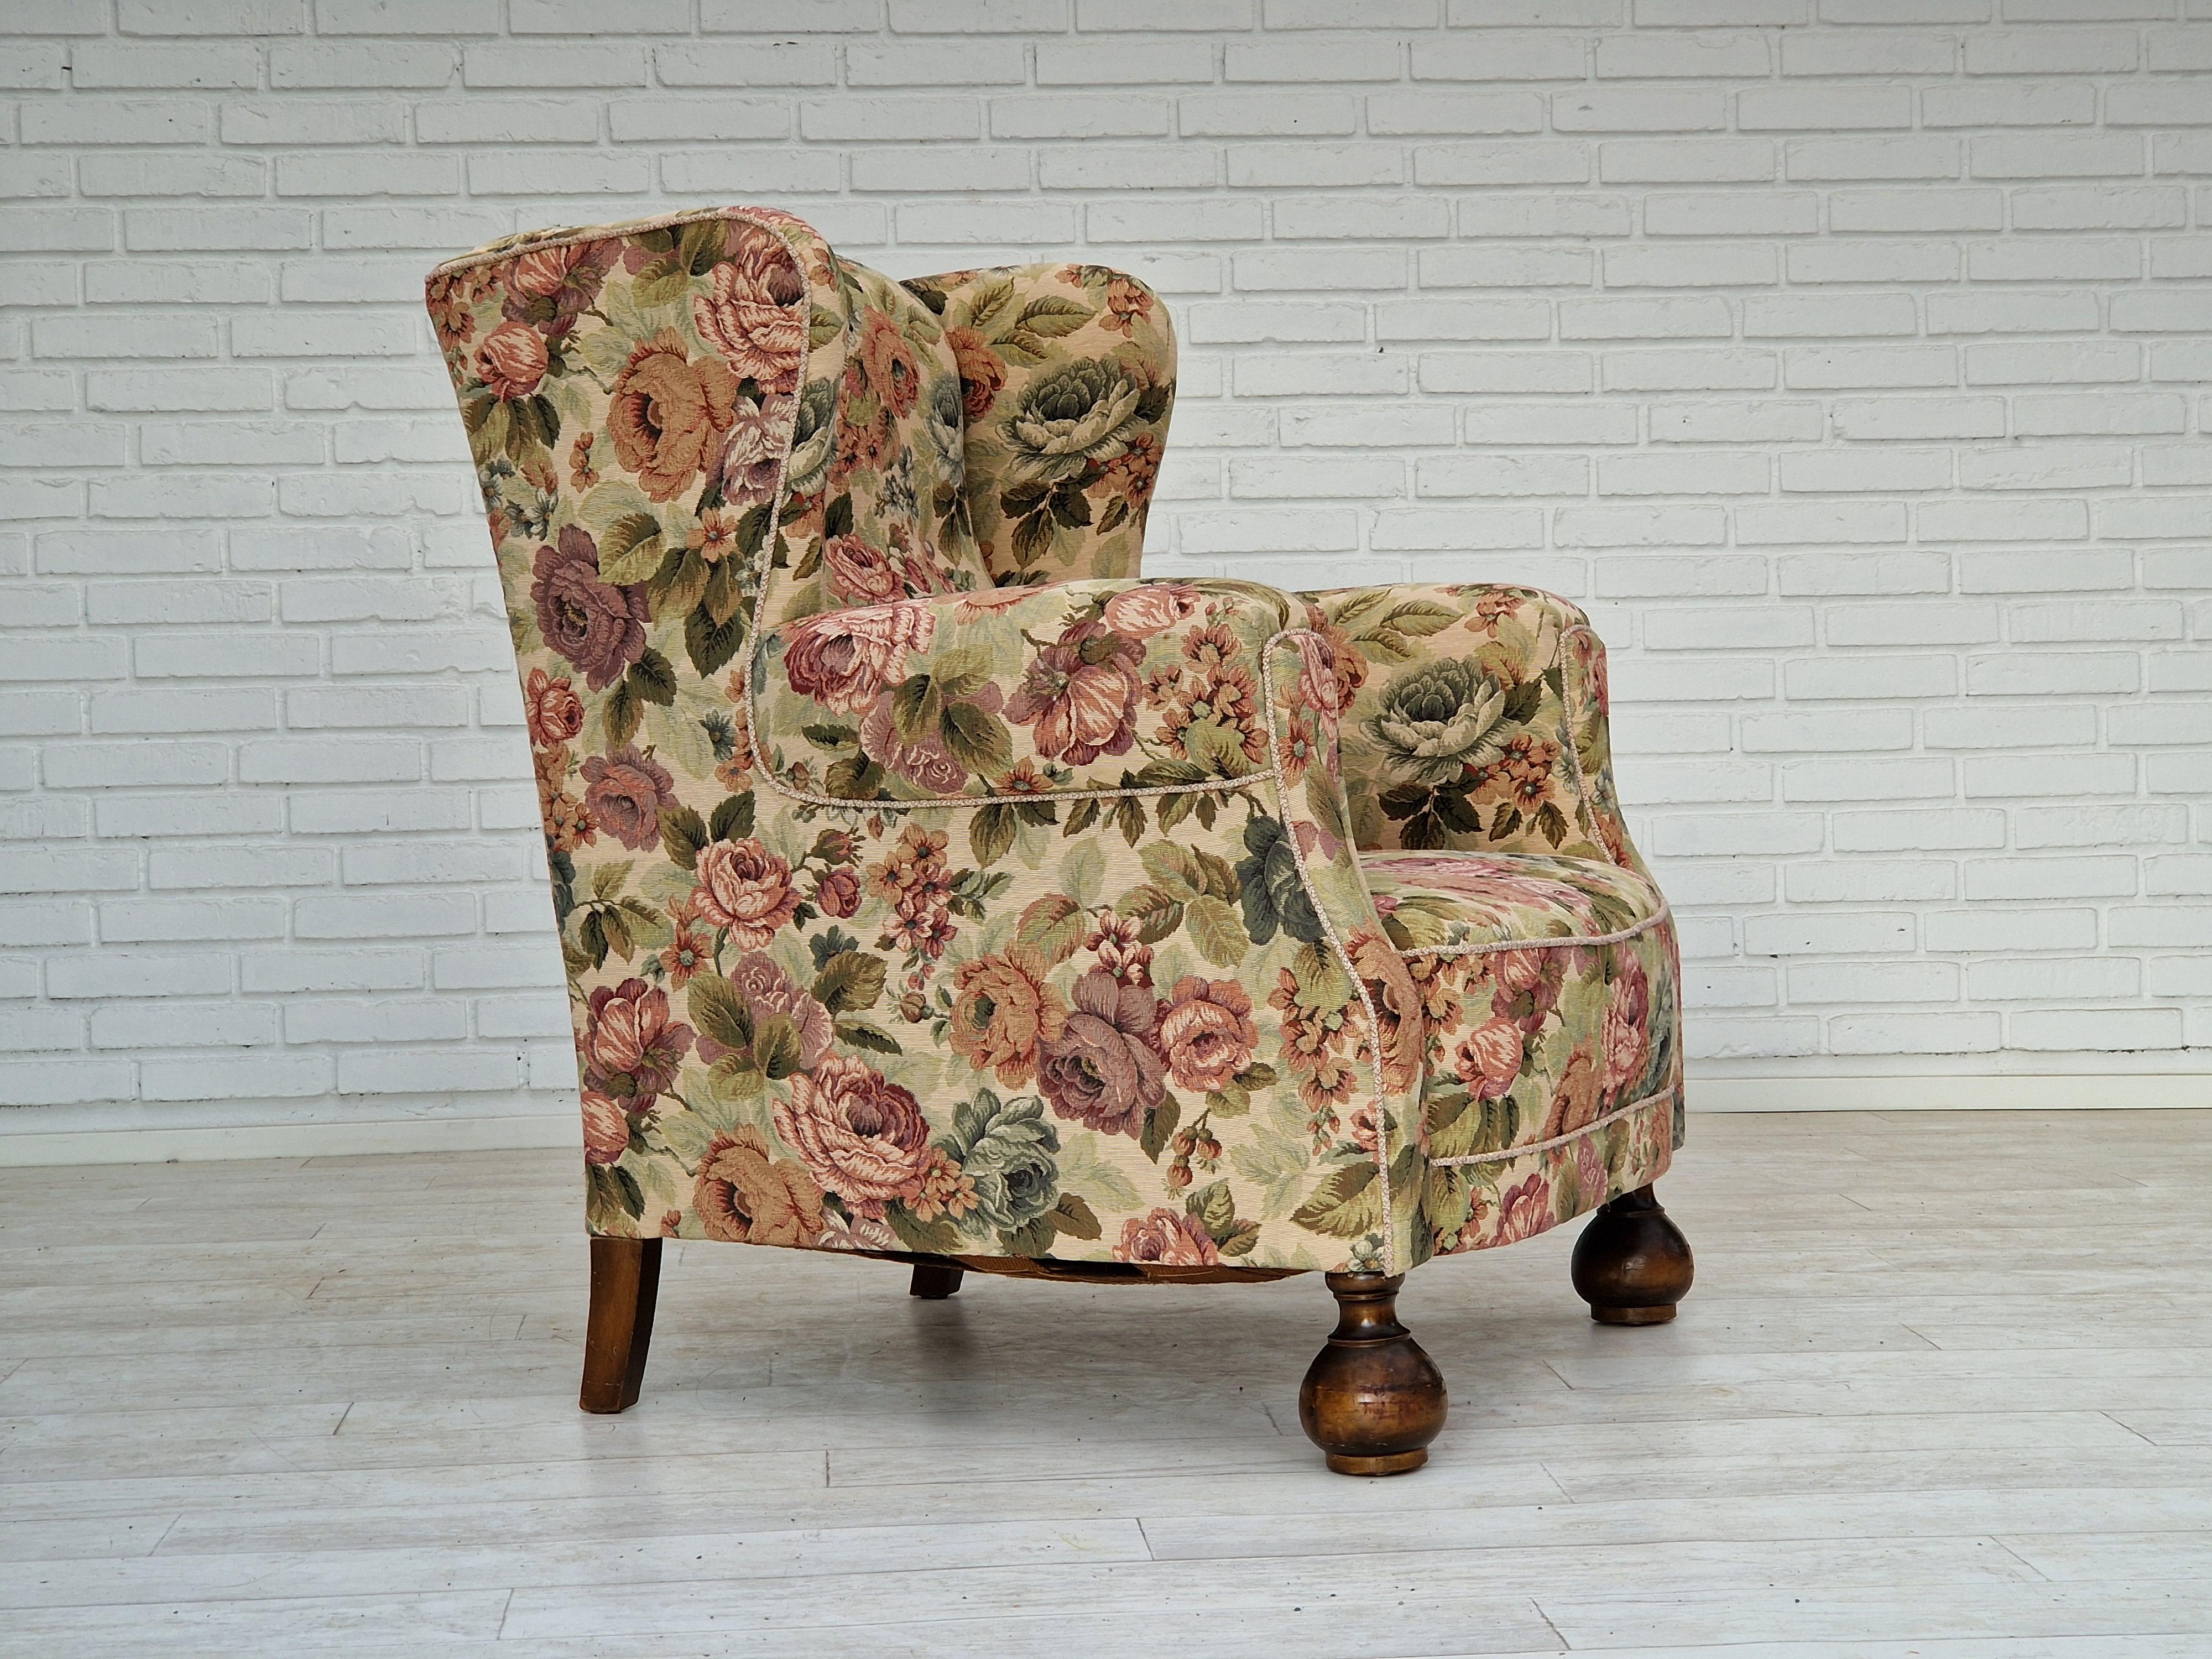 1950s, Danish design. Relax chair in 